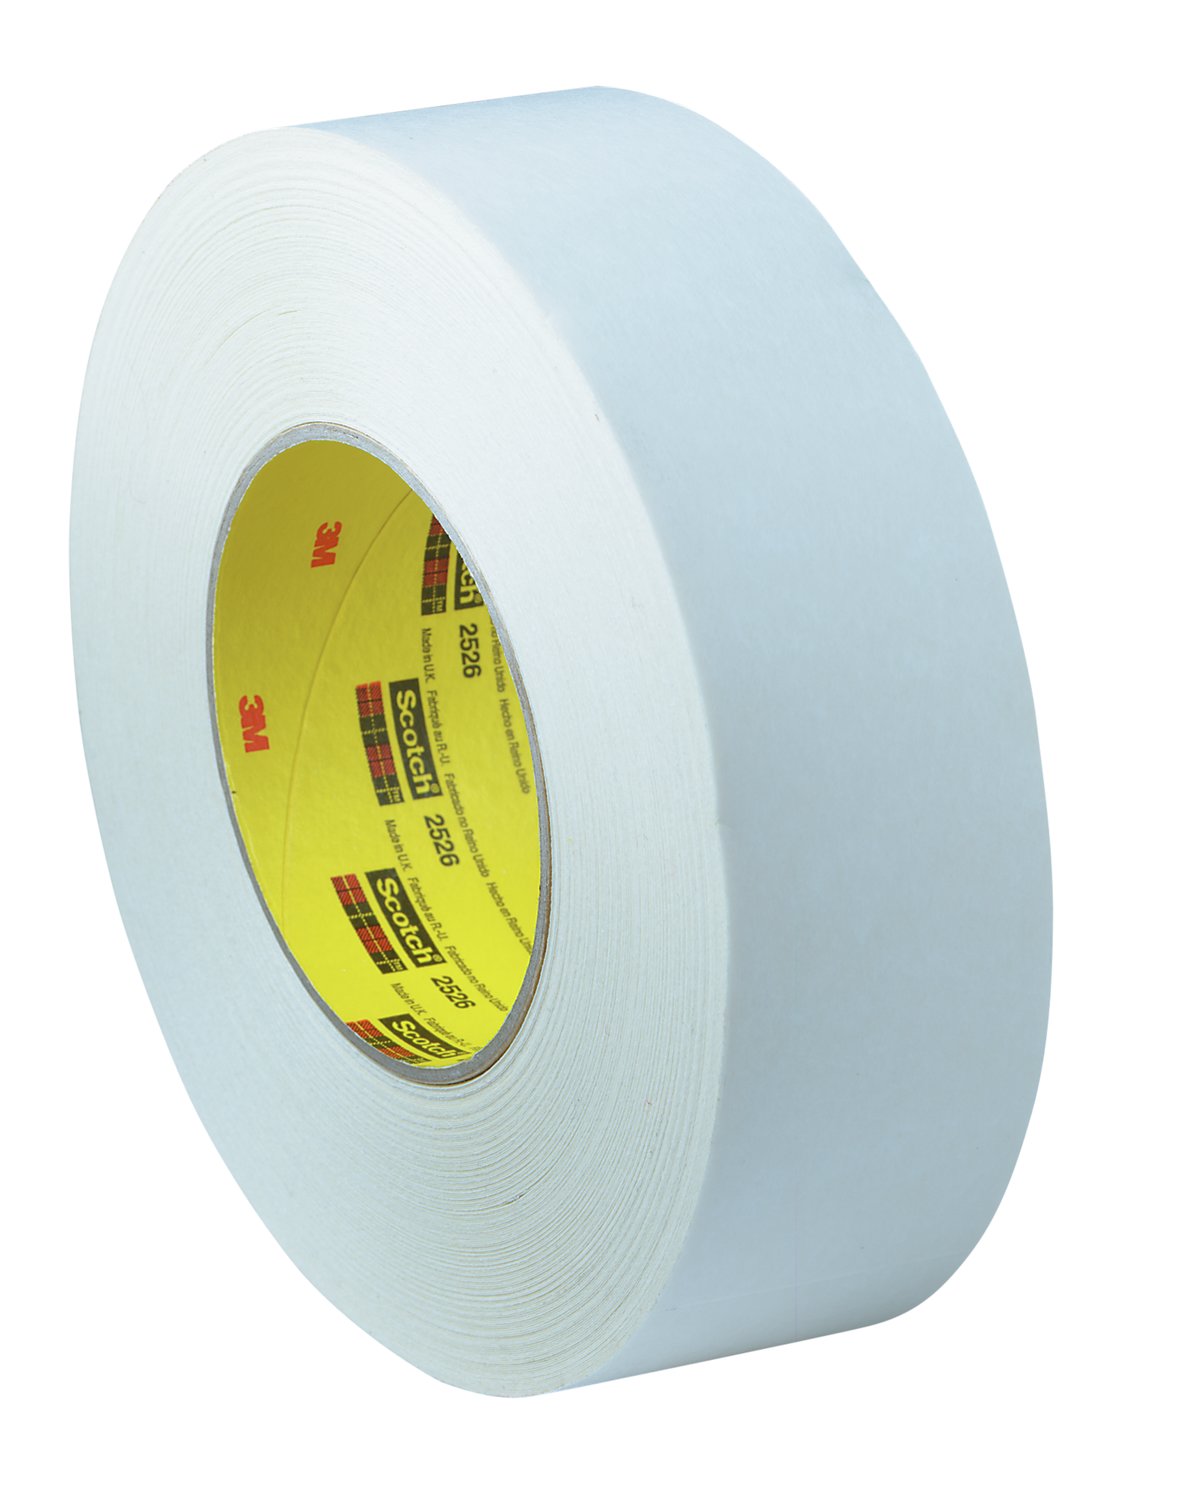 7010373789 - 3M Textile Flatback Tape 2526, White, 48 mm x 55 m, 9.8 mil, 24
Rolls/Case